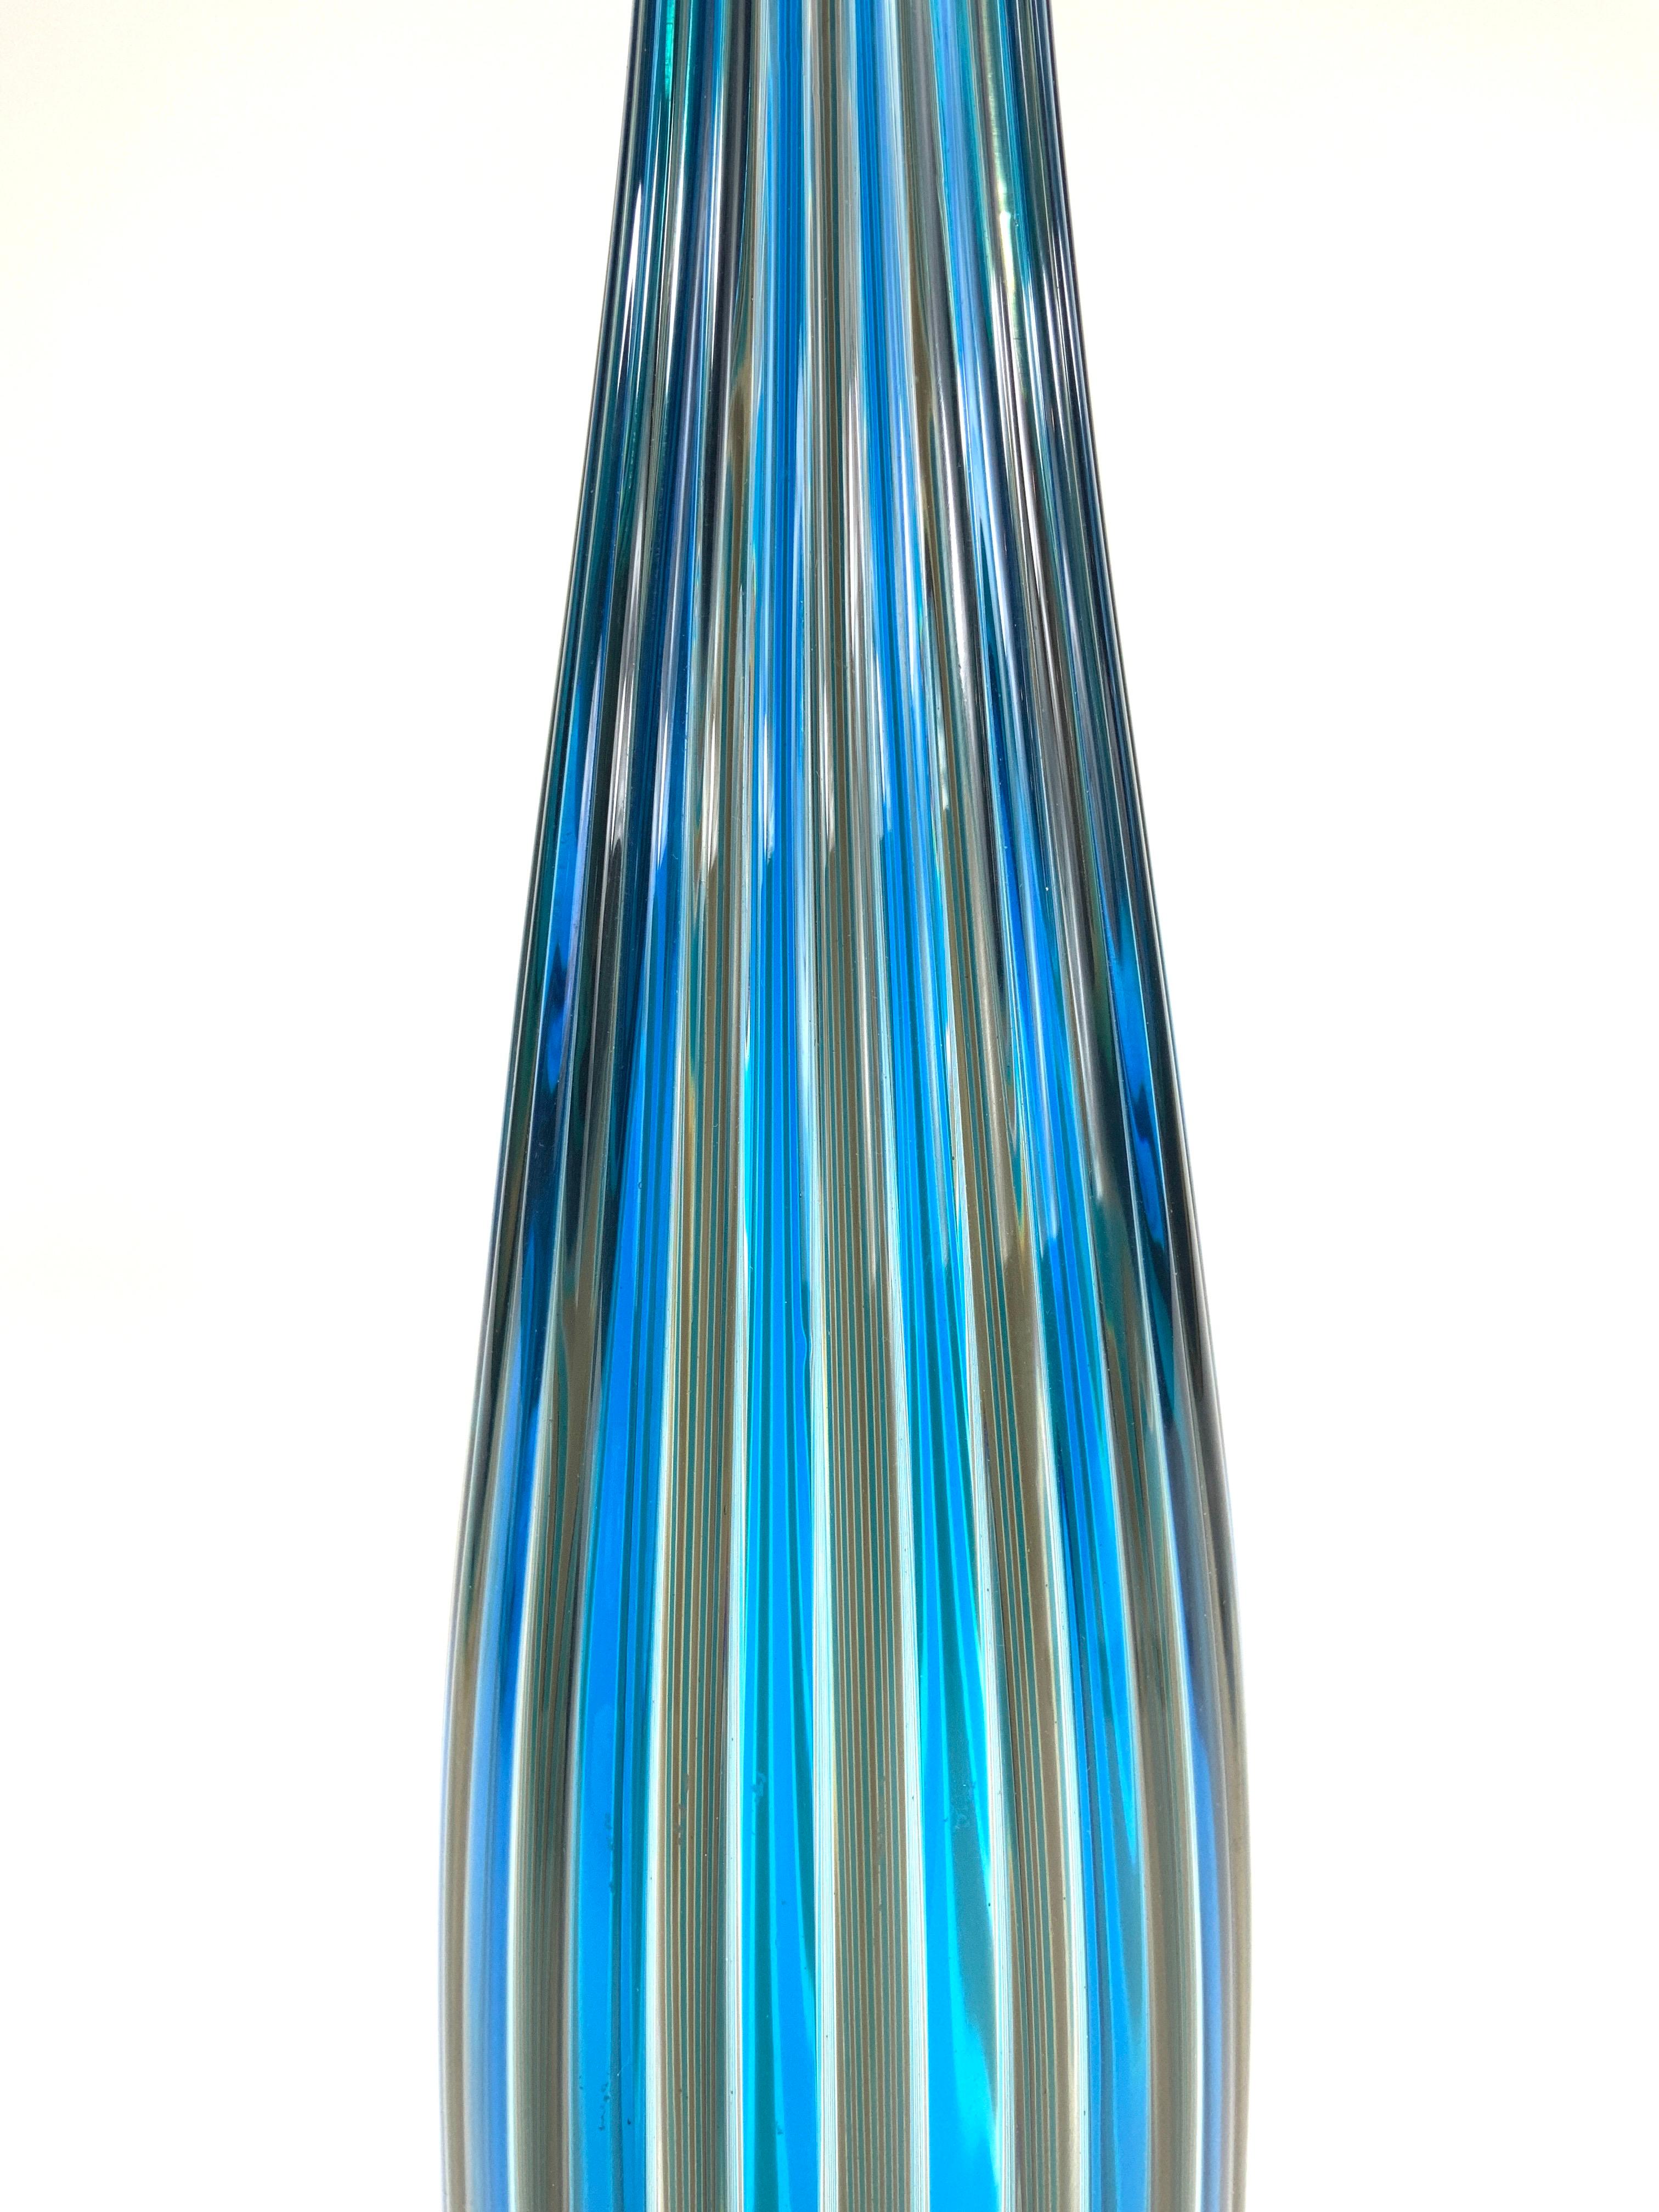 Fulvio Bianconi Murano Venini Glass Bottle Vase, 1984 For Sale 5